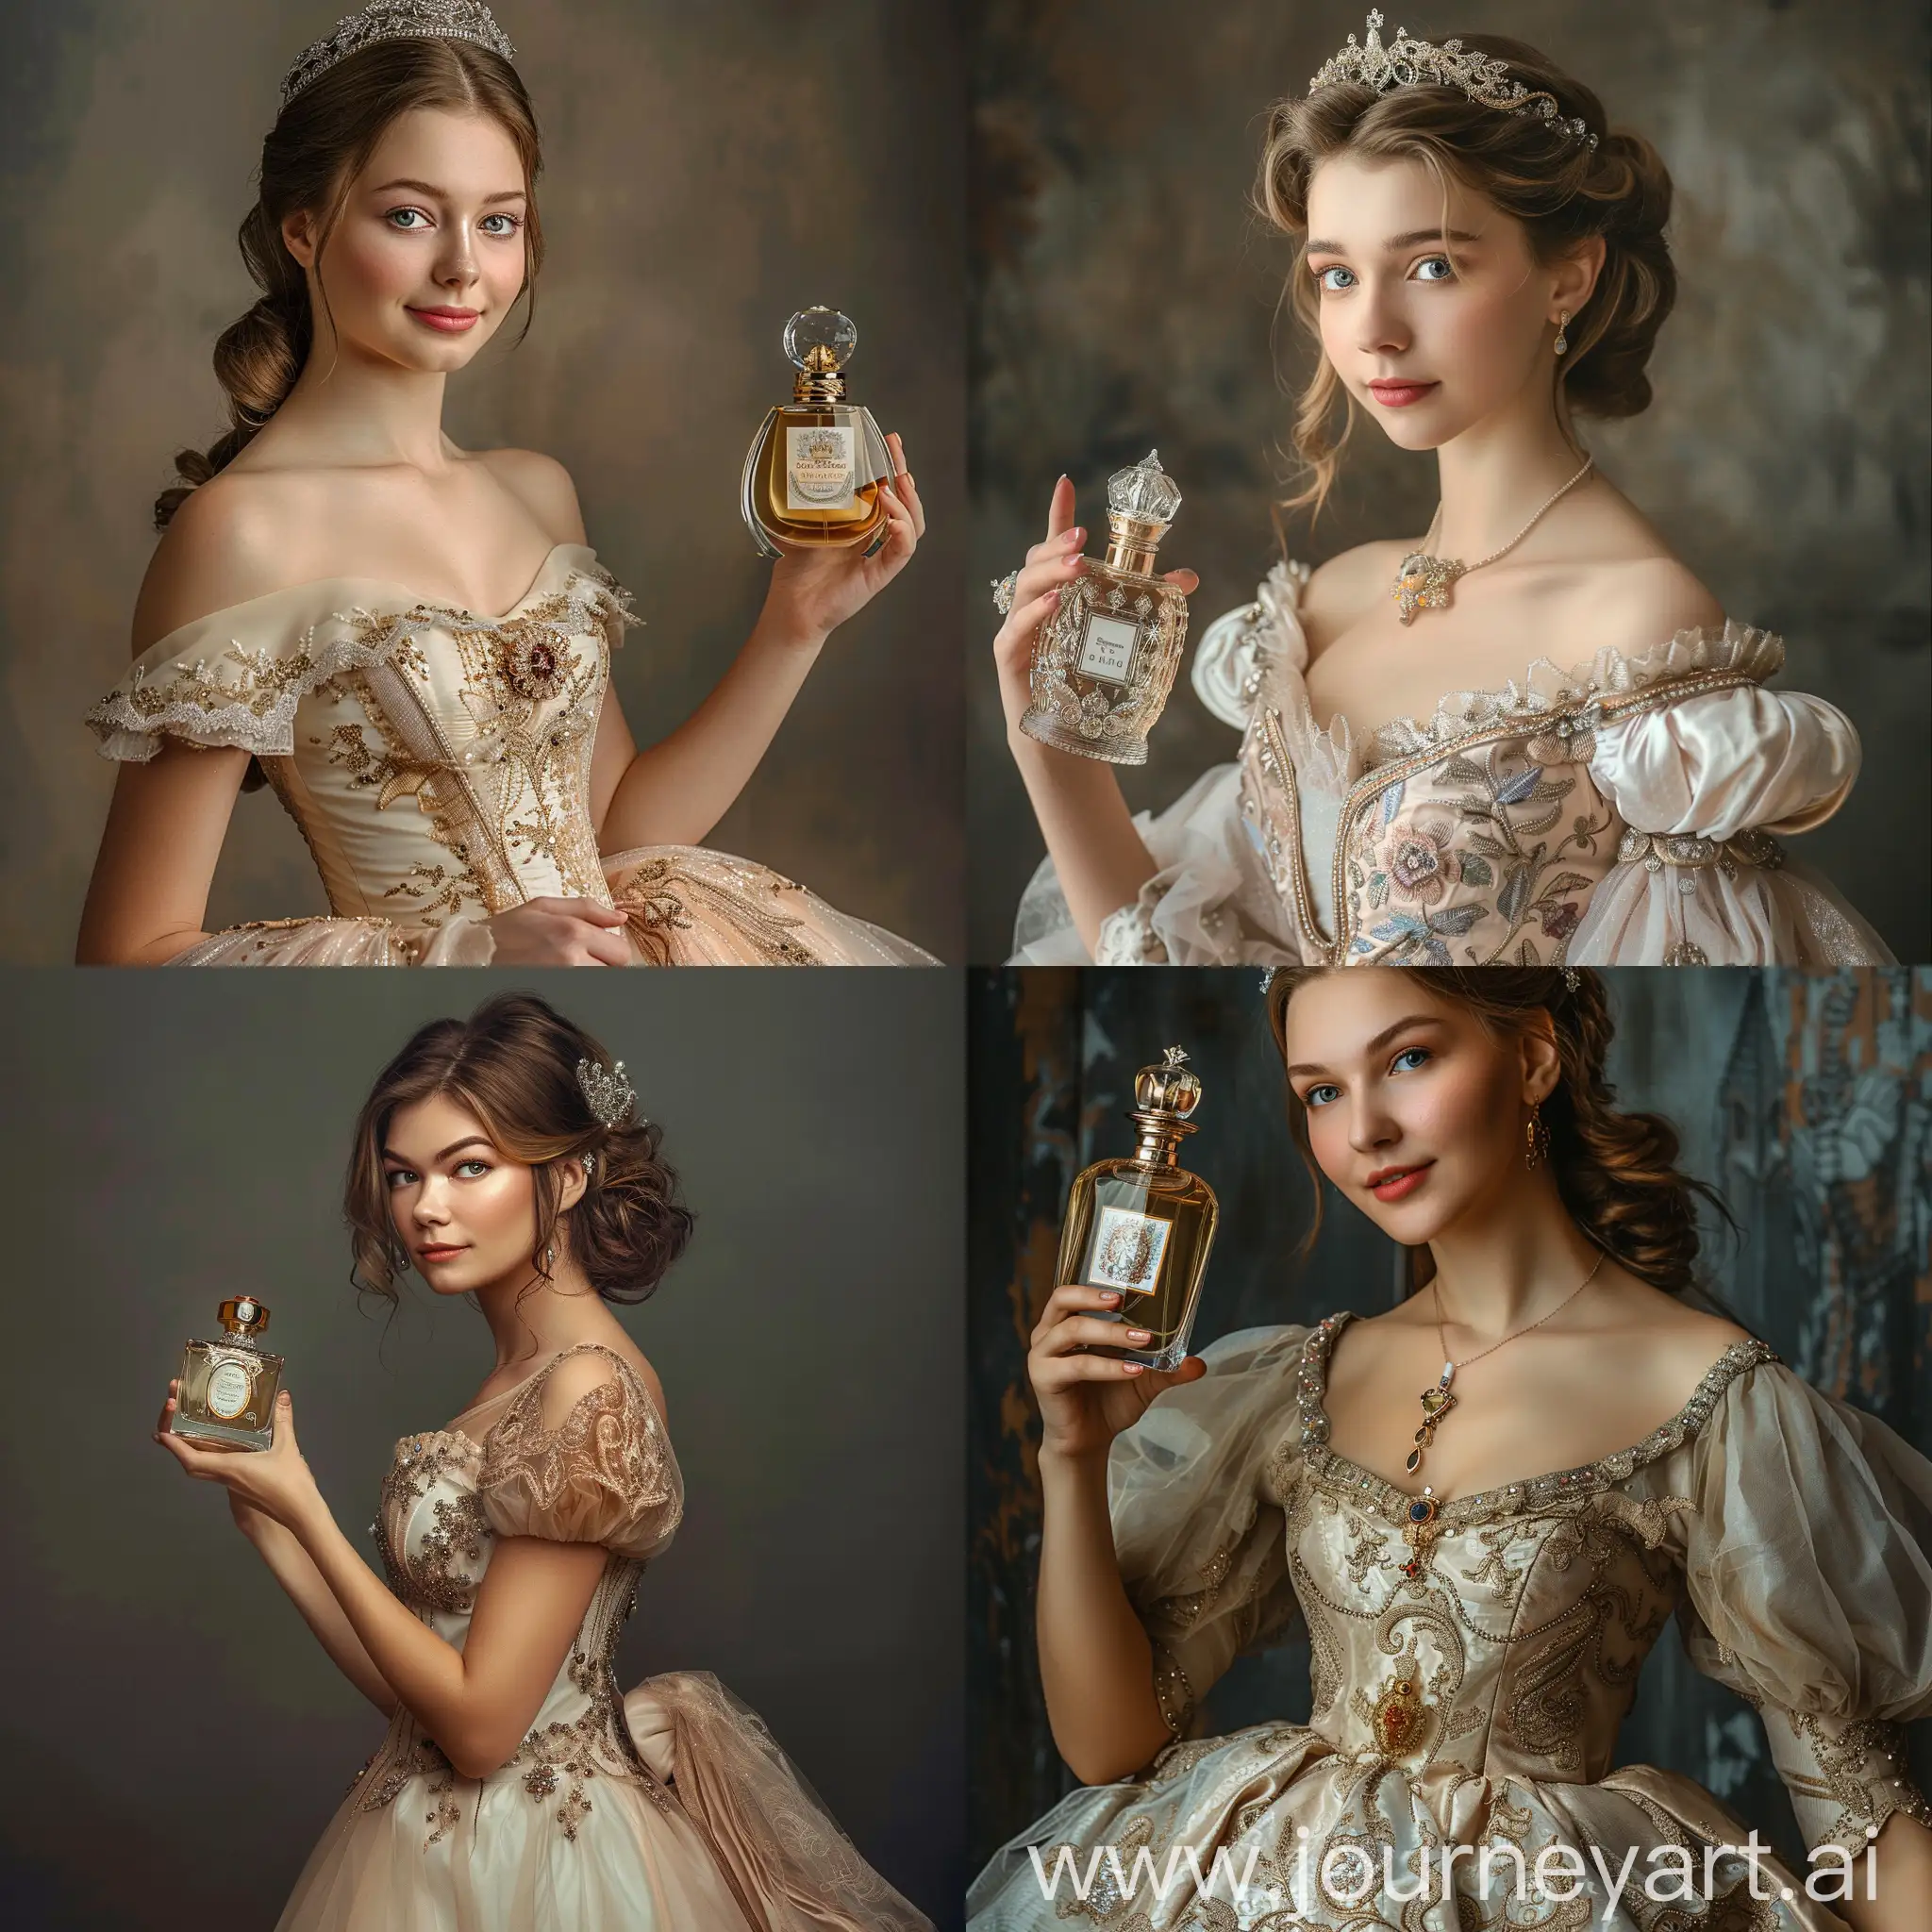 Elegant-Princess-in-Royal-Pose-Holding-Perfume-Bottle